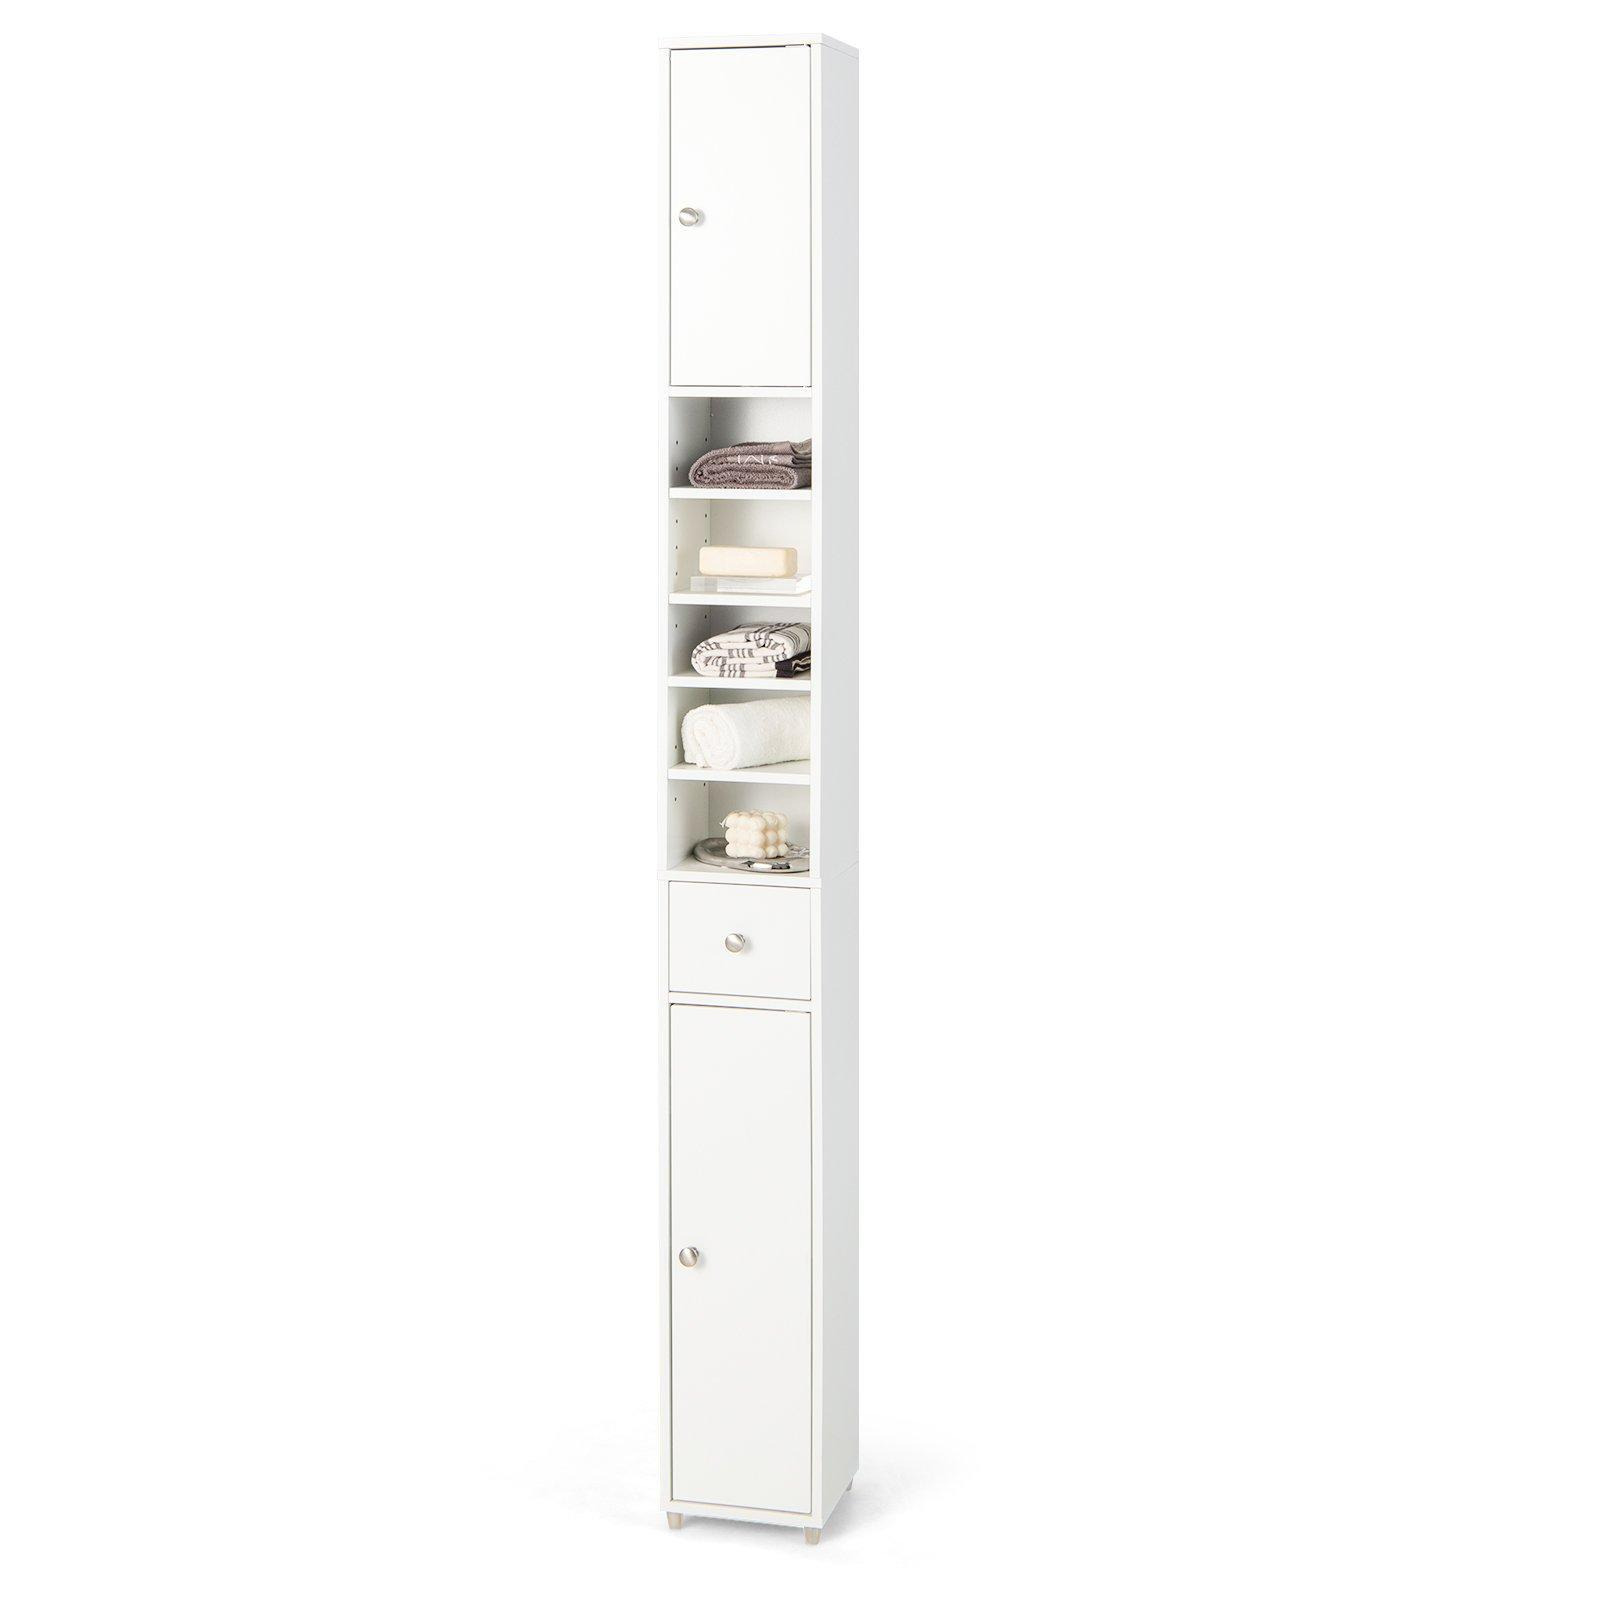 Bathroom Tall Cabinet Slim Freestanding Storage Organizer Cupboard With 2 Doors - image 1